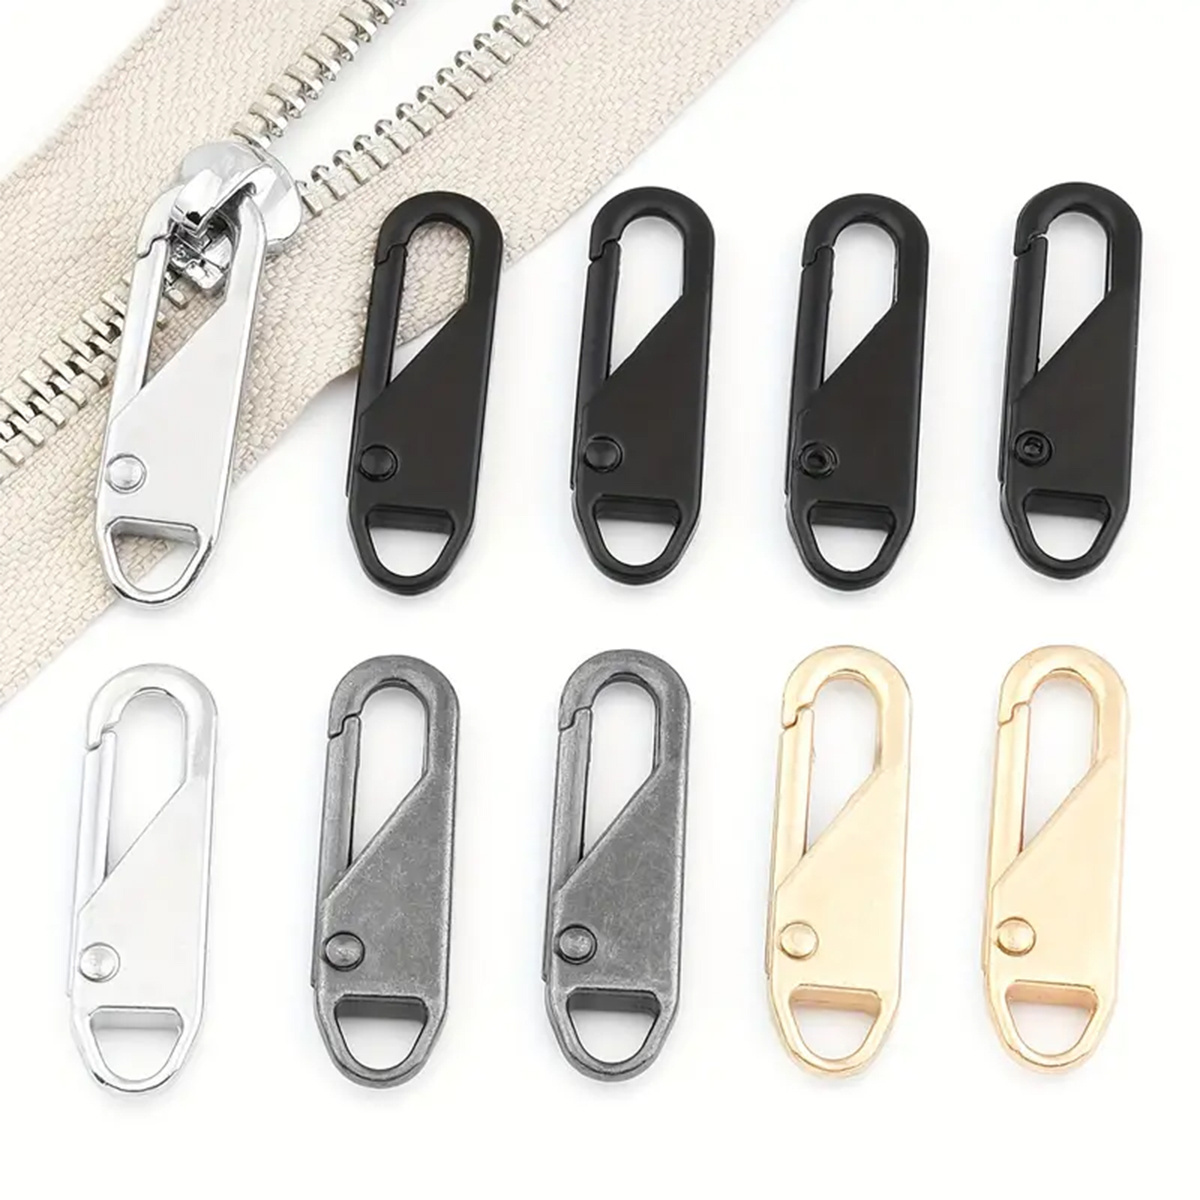 Detachable Metal Zipper Replacement Bag Shoes Clothes Pull - Temu